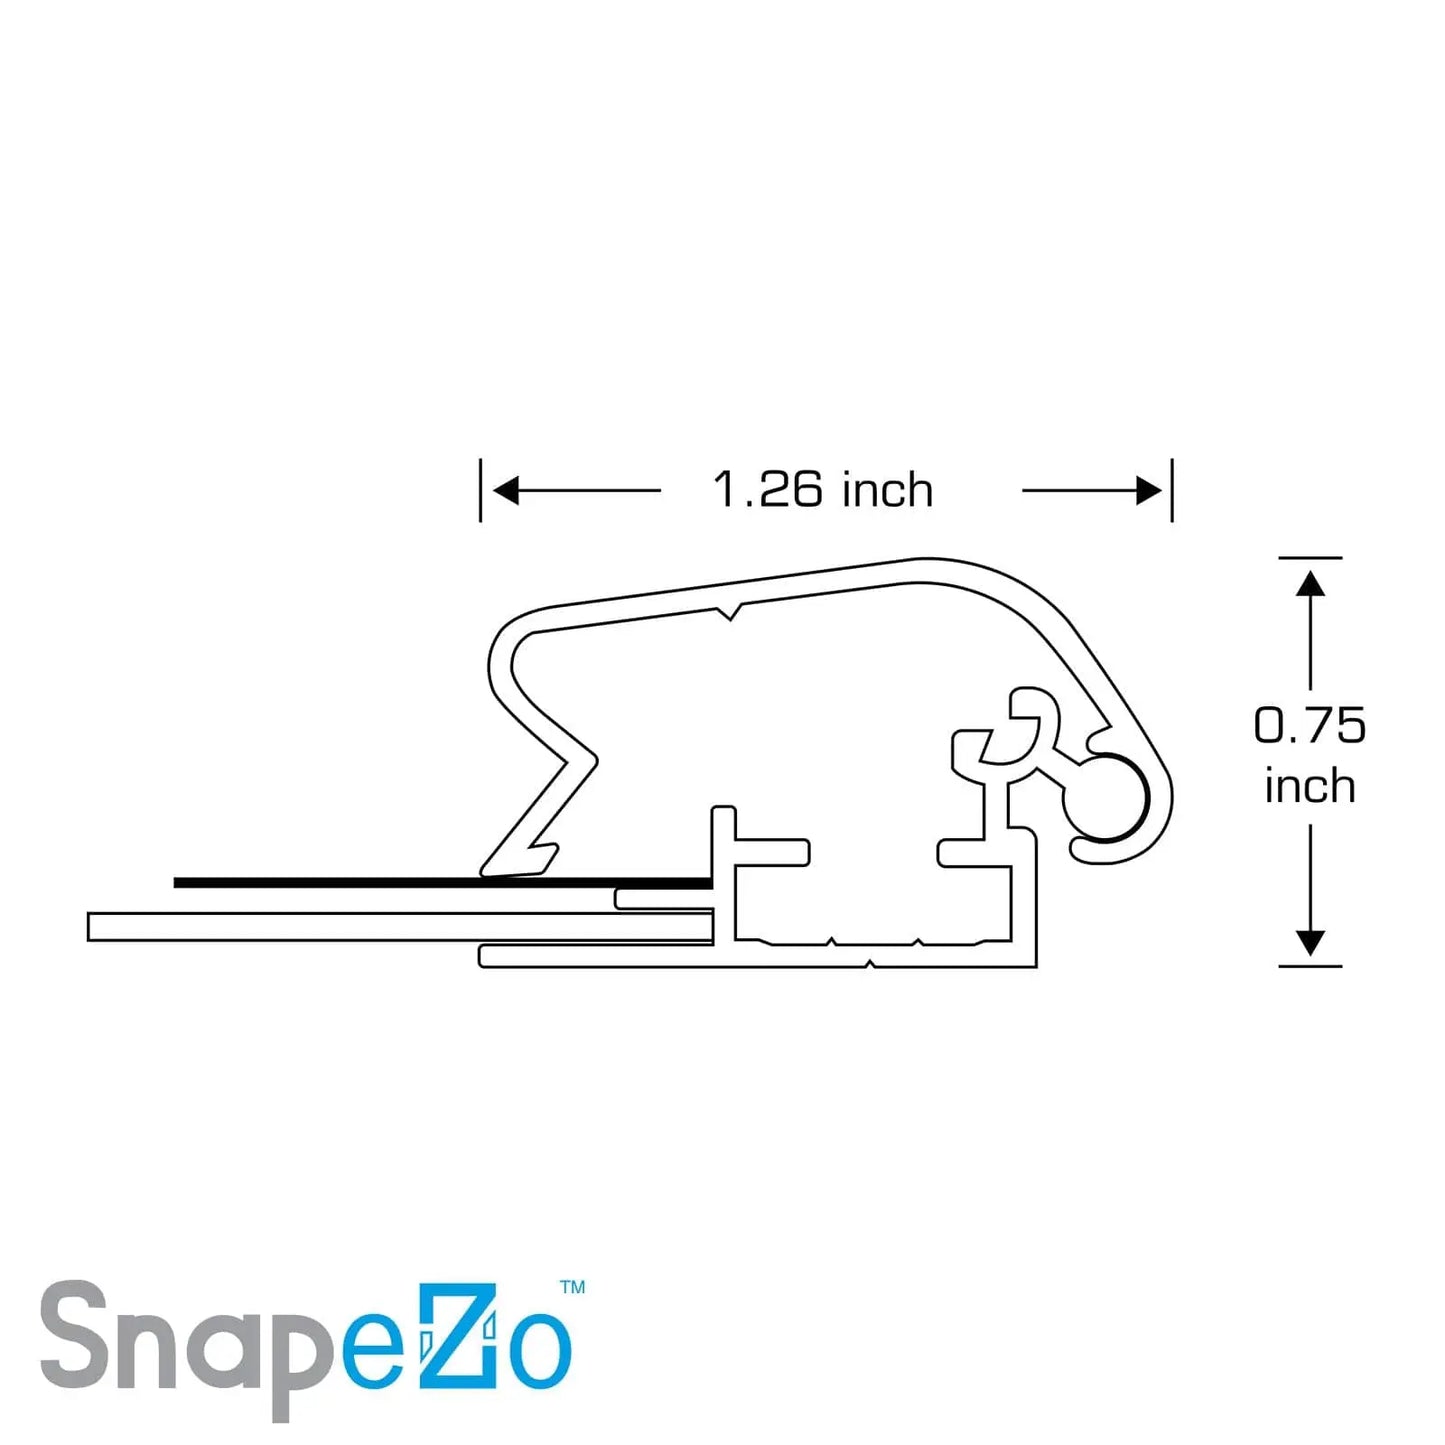 20x30 White SnapeZo® Snap Frame - 1.25" Profile - Snap Frames Direct